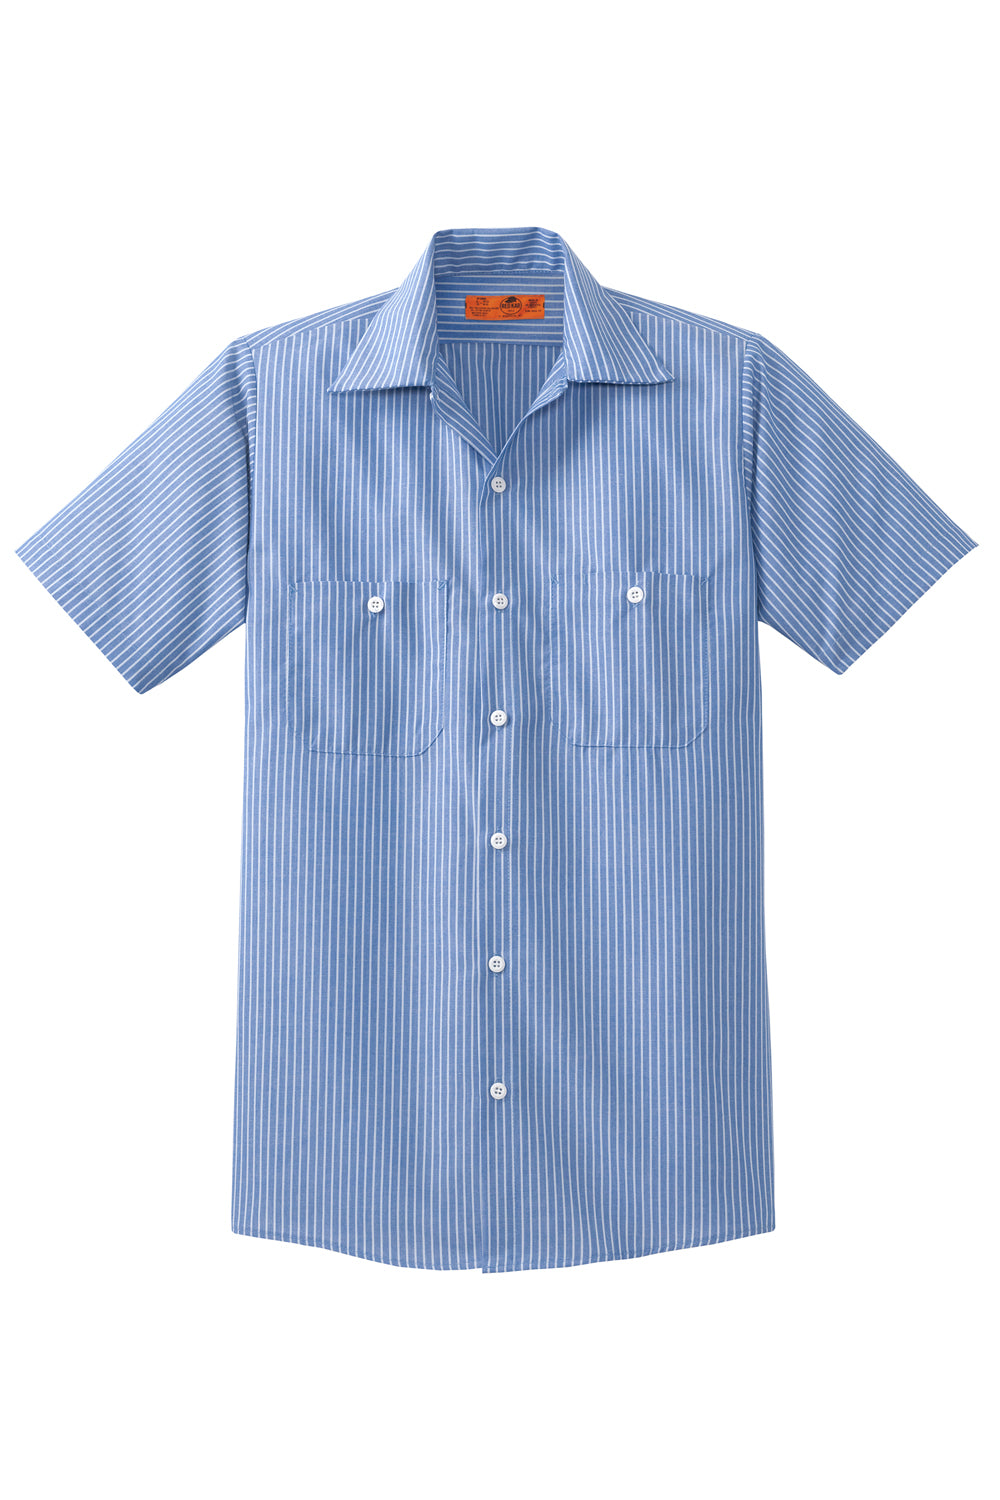 Red Kap CS20/CS20LONG Mens Industrial Moisture Wicking Short Sleeve Button Down Shirt w/ Double Pockets Blue/White Flat Front